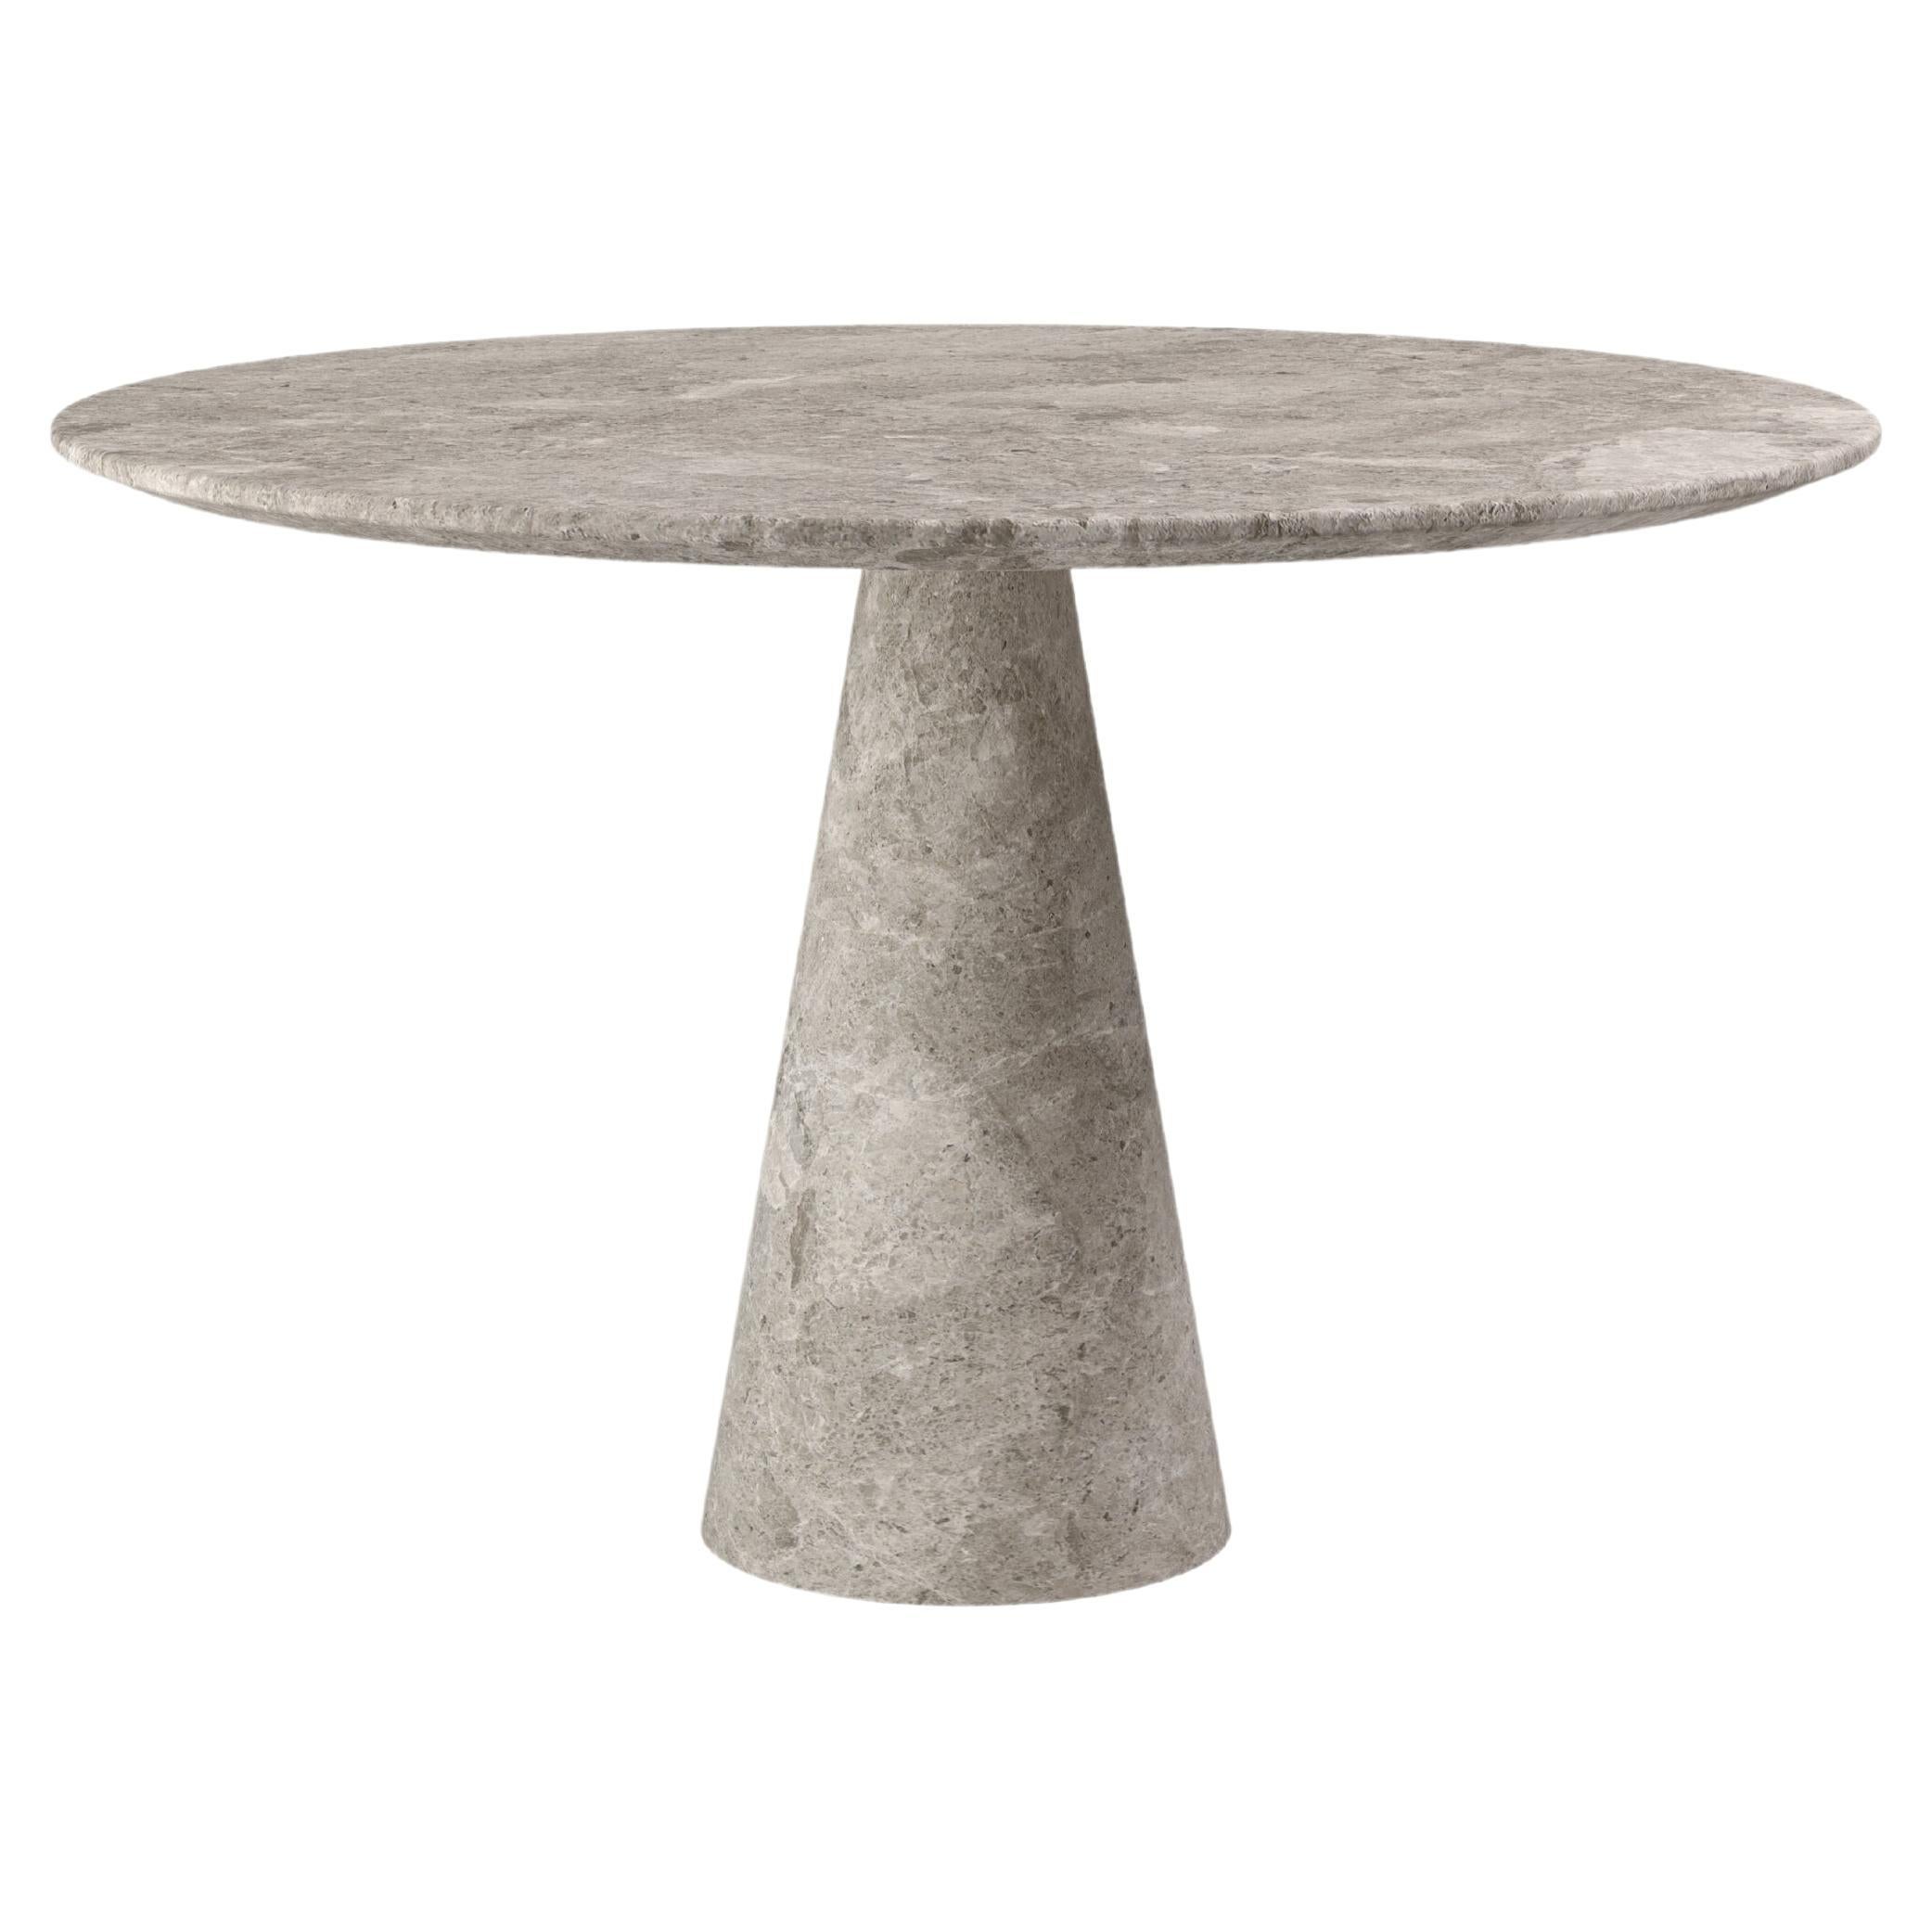 FORM(LA) Cono Round Dining Table 36”L x 36”W x 30”H Tundra Gray Marble